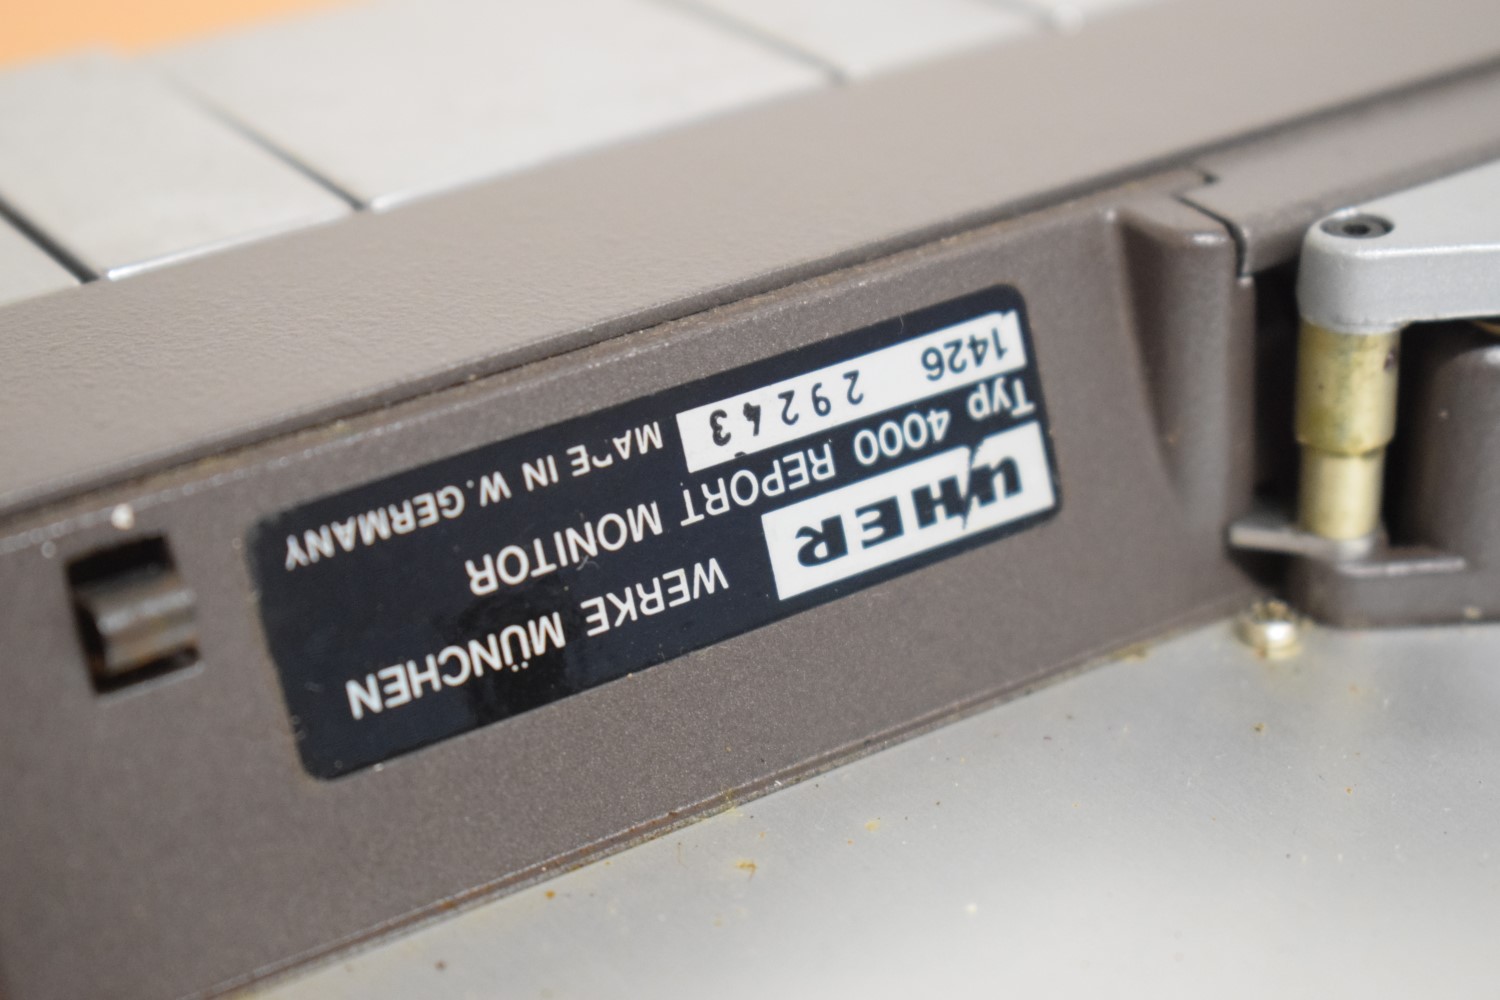 Uher 4000 Report Monitor Tragbare Mono Tonbandmaschine